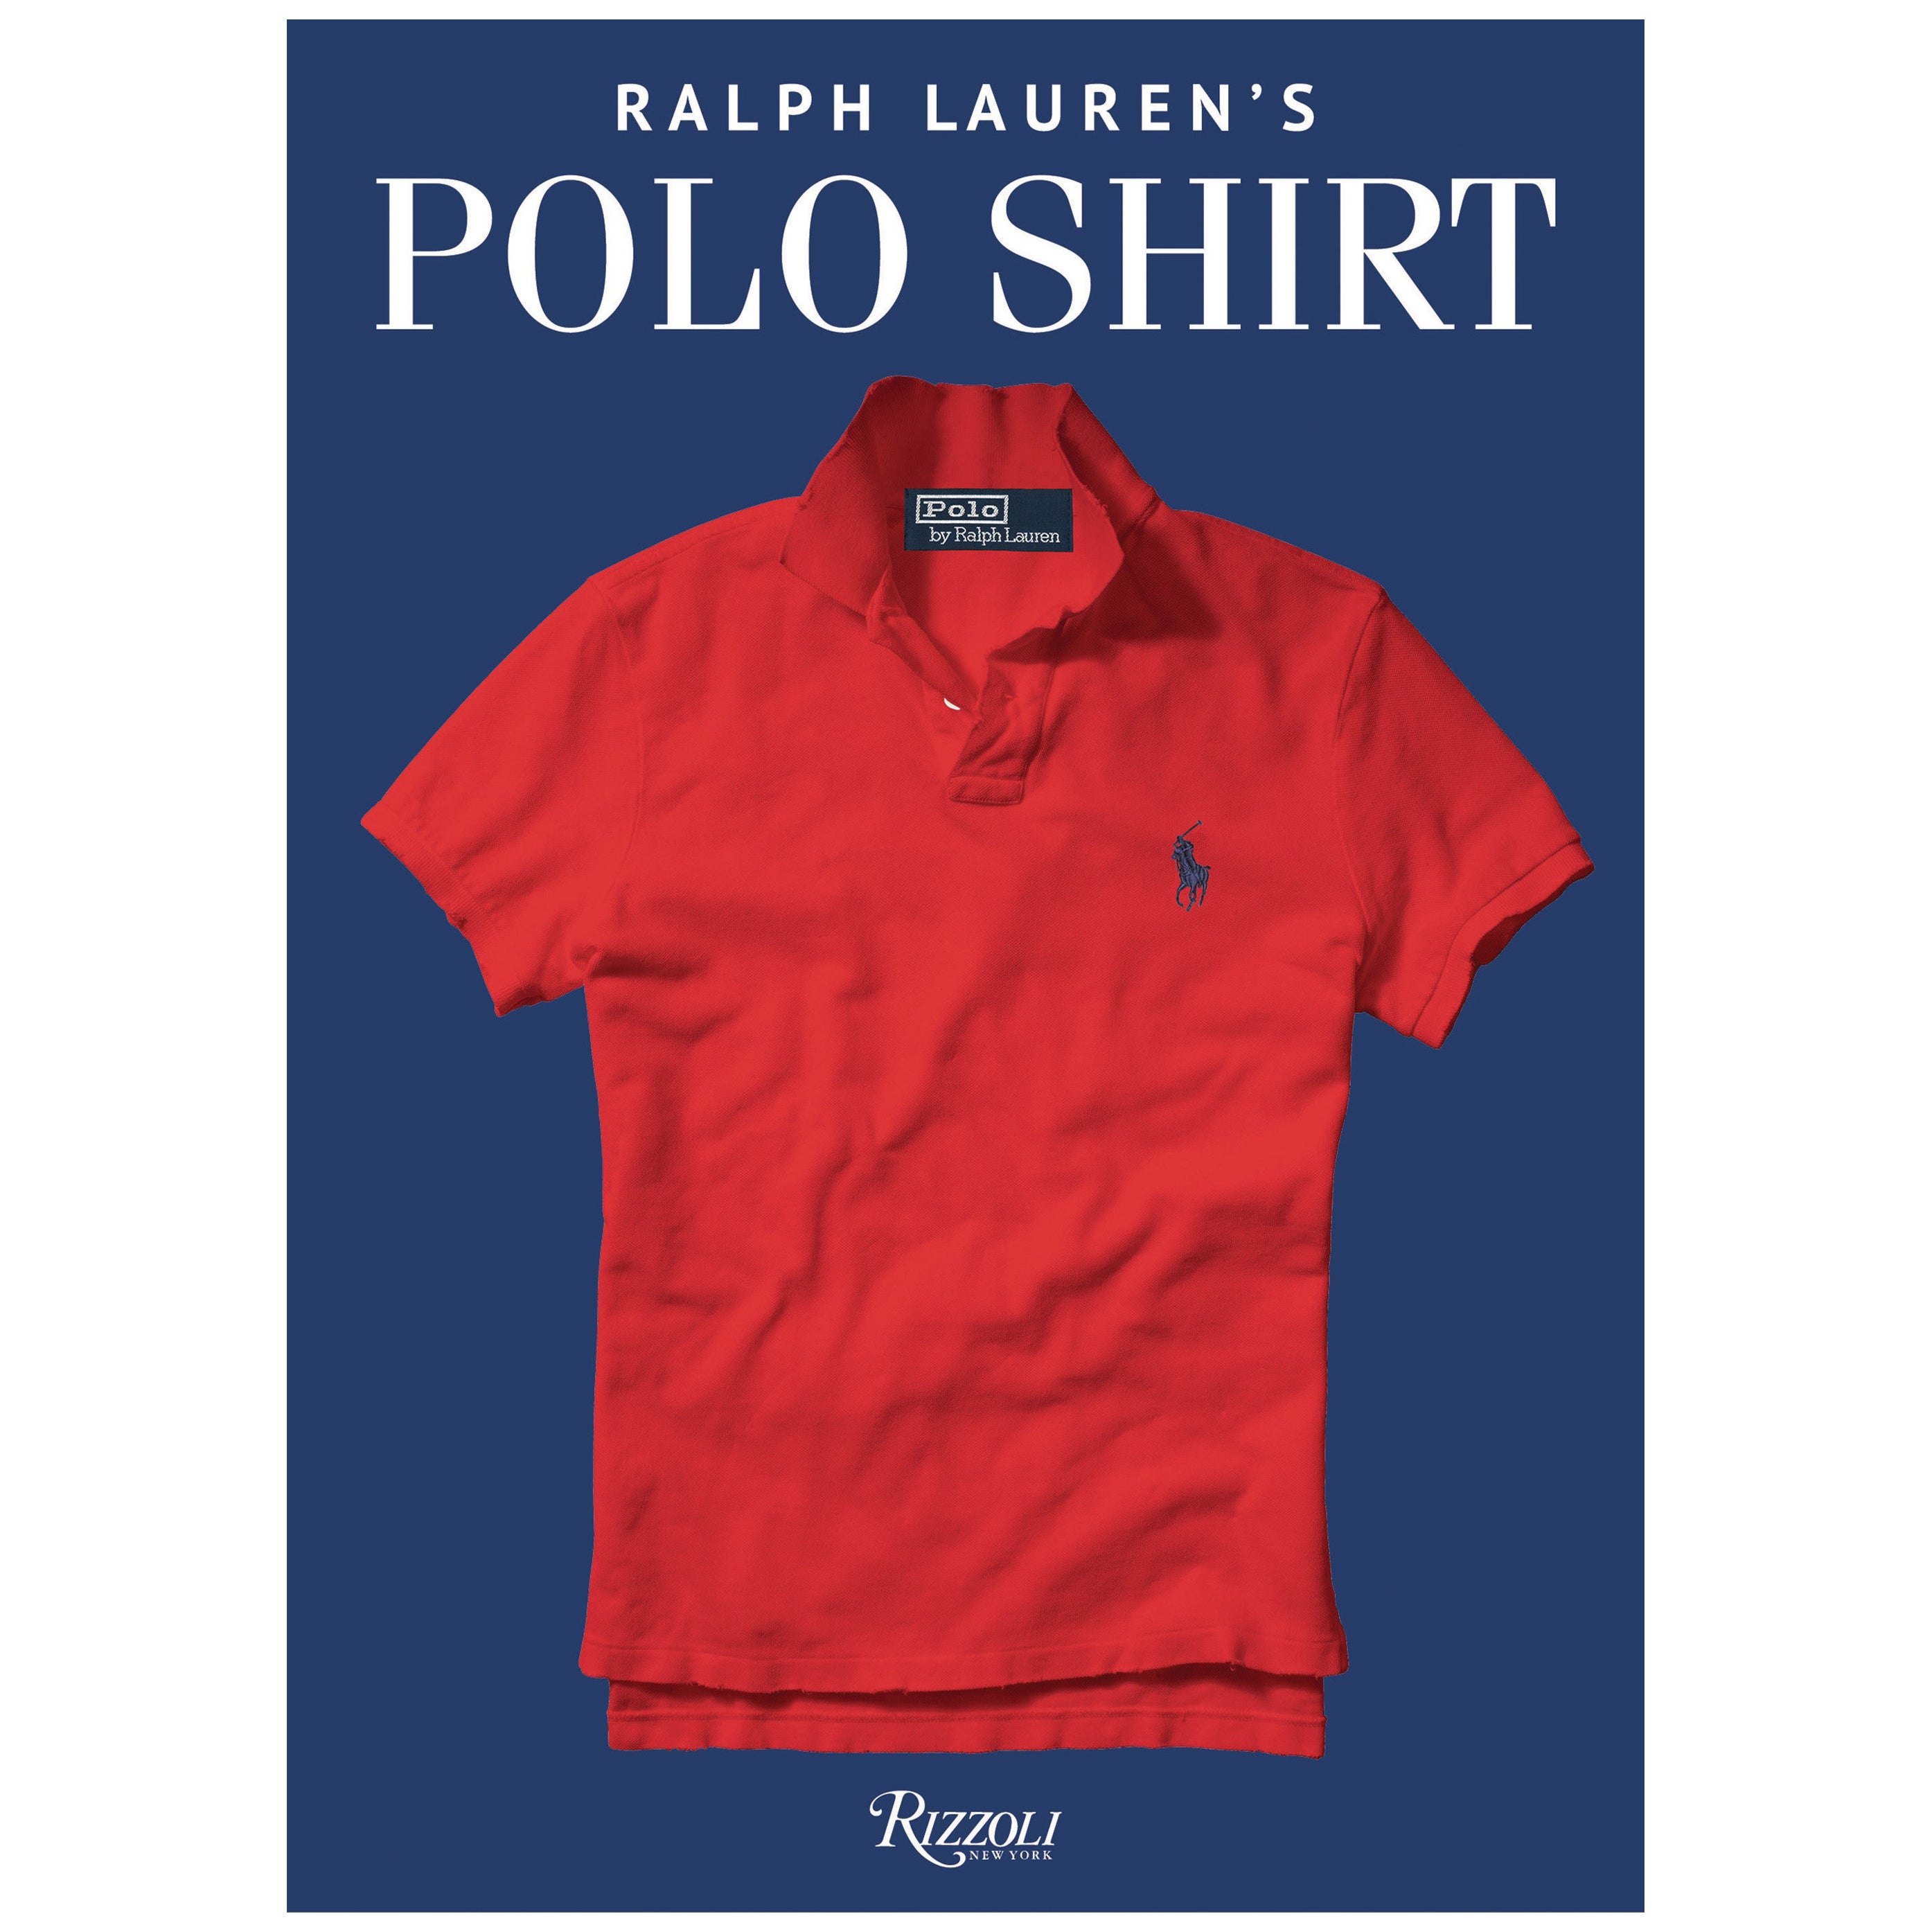 Ralph Lauren's Polo Shirt For Sale